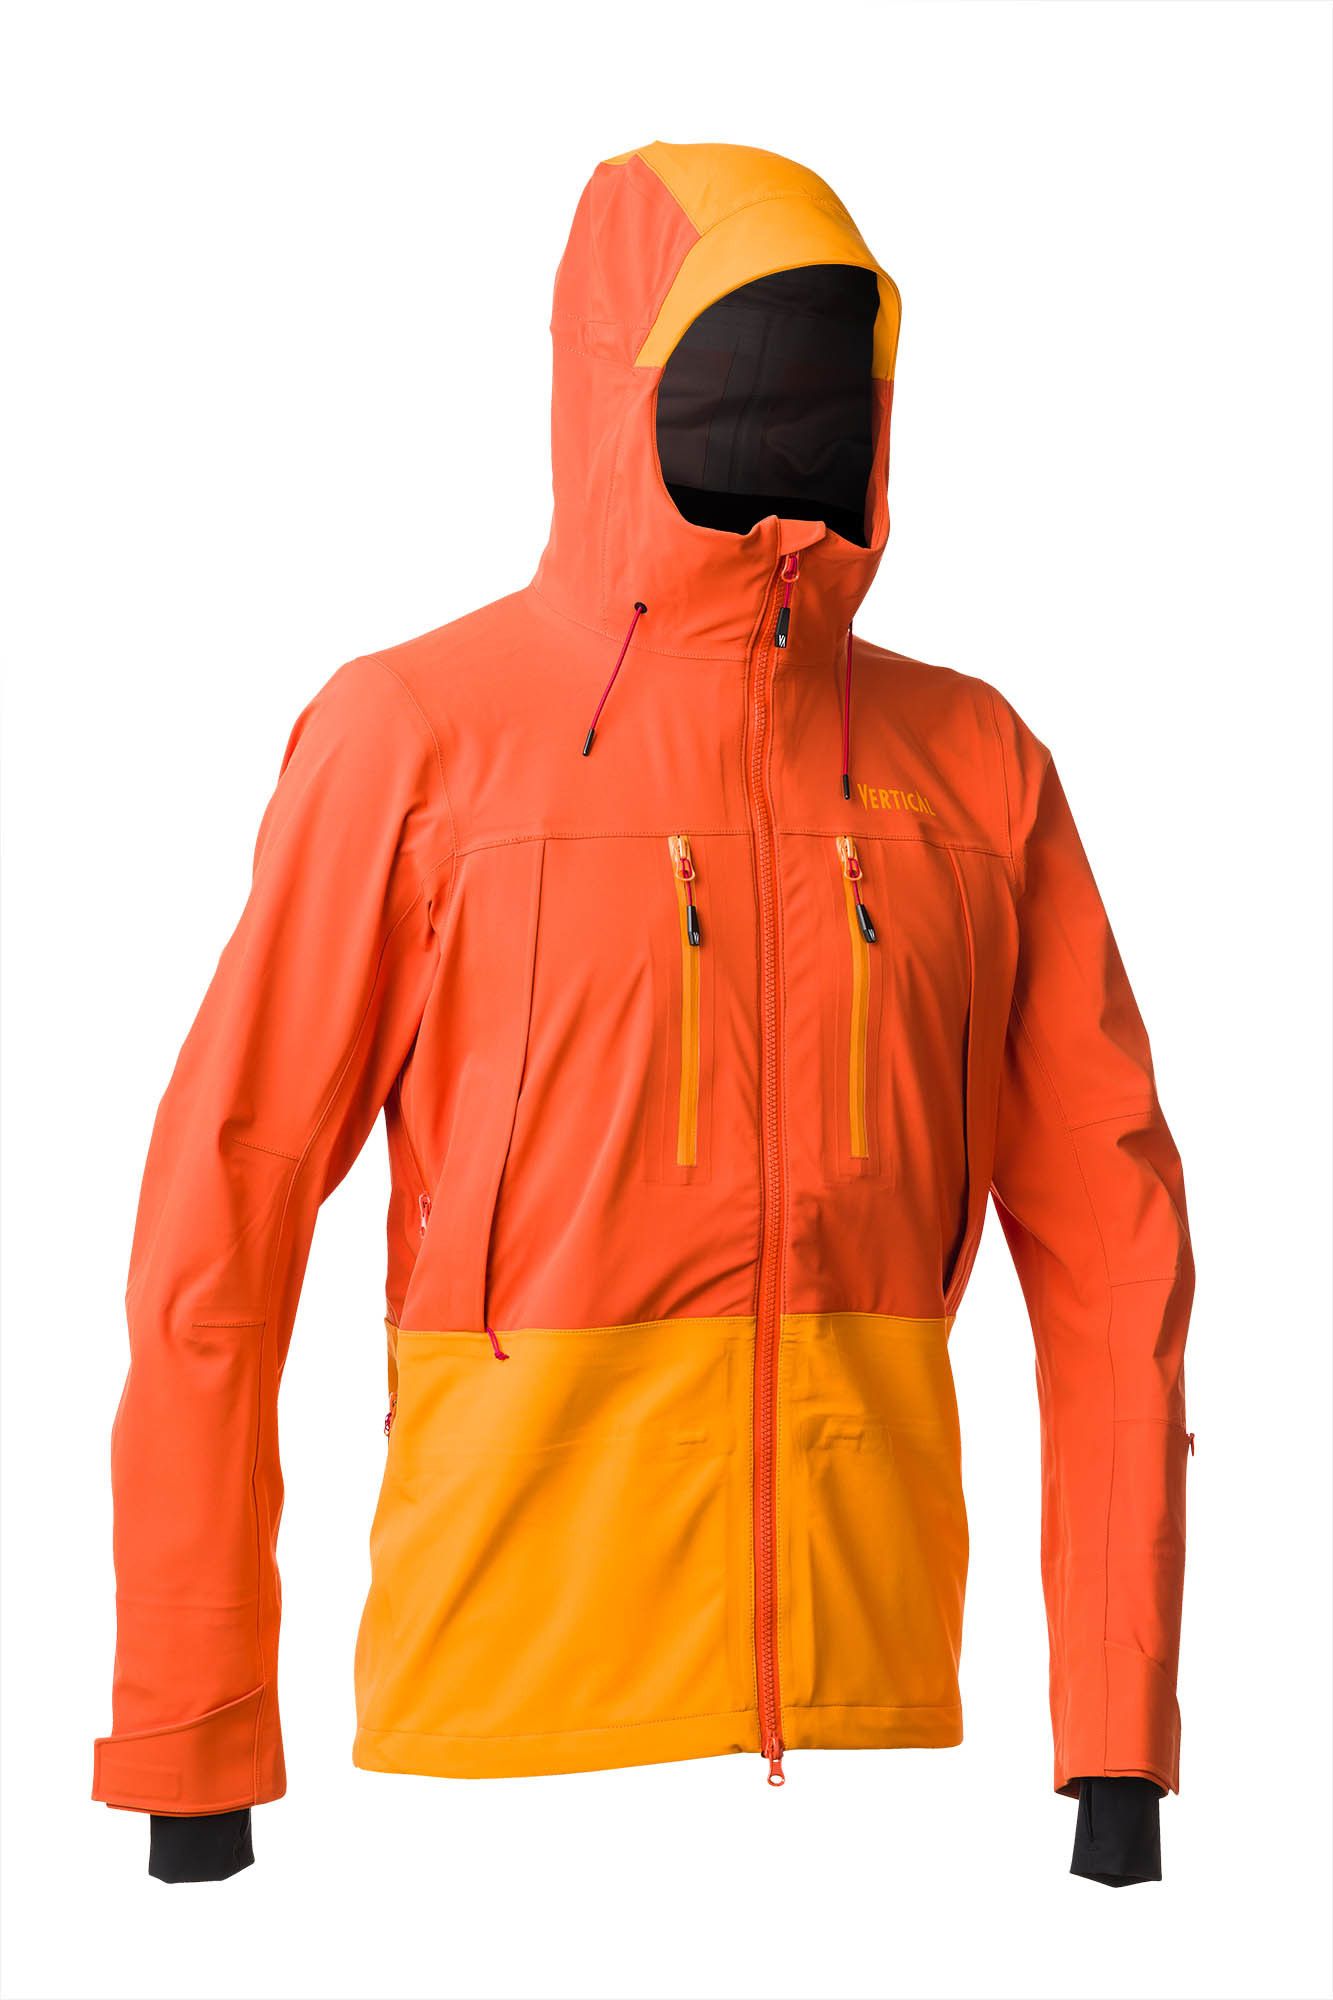 Vertical Mythic MP+ Jacket - Ski jacket - Men's